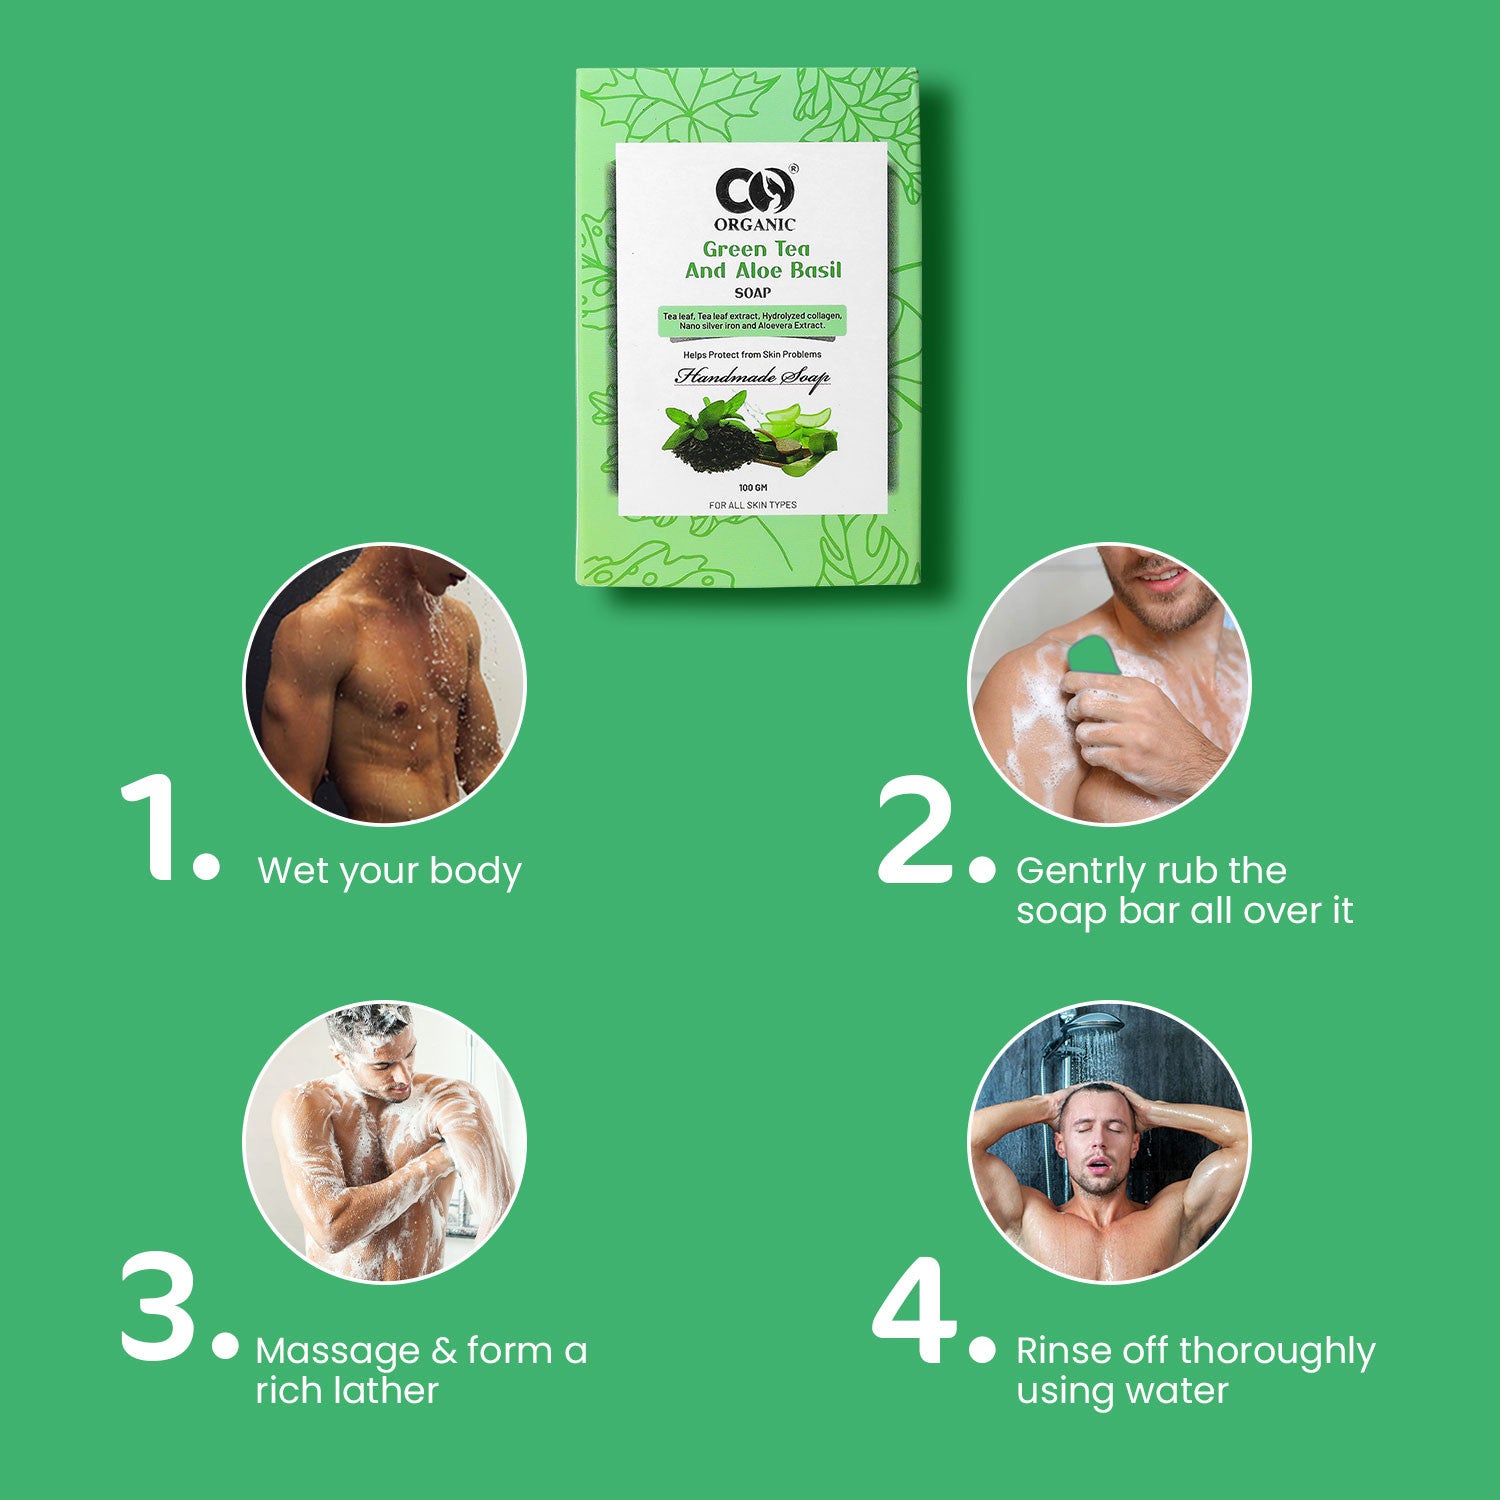 Co Organic Green Tea Aloe & Basil Soap - Pack of 2